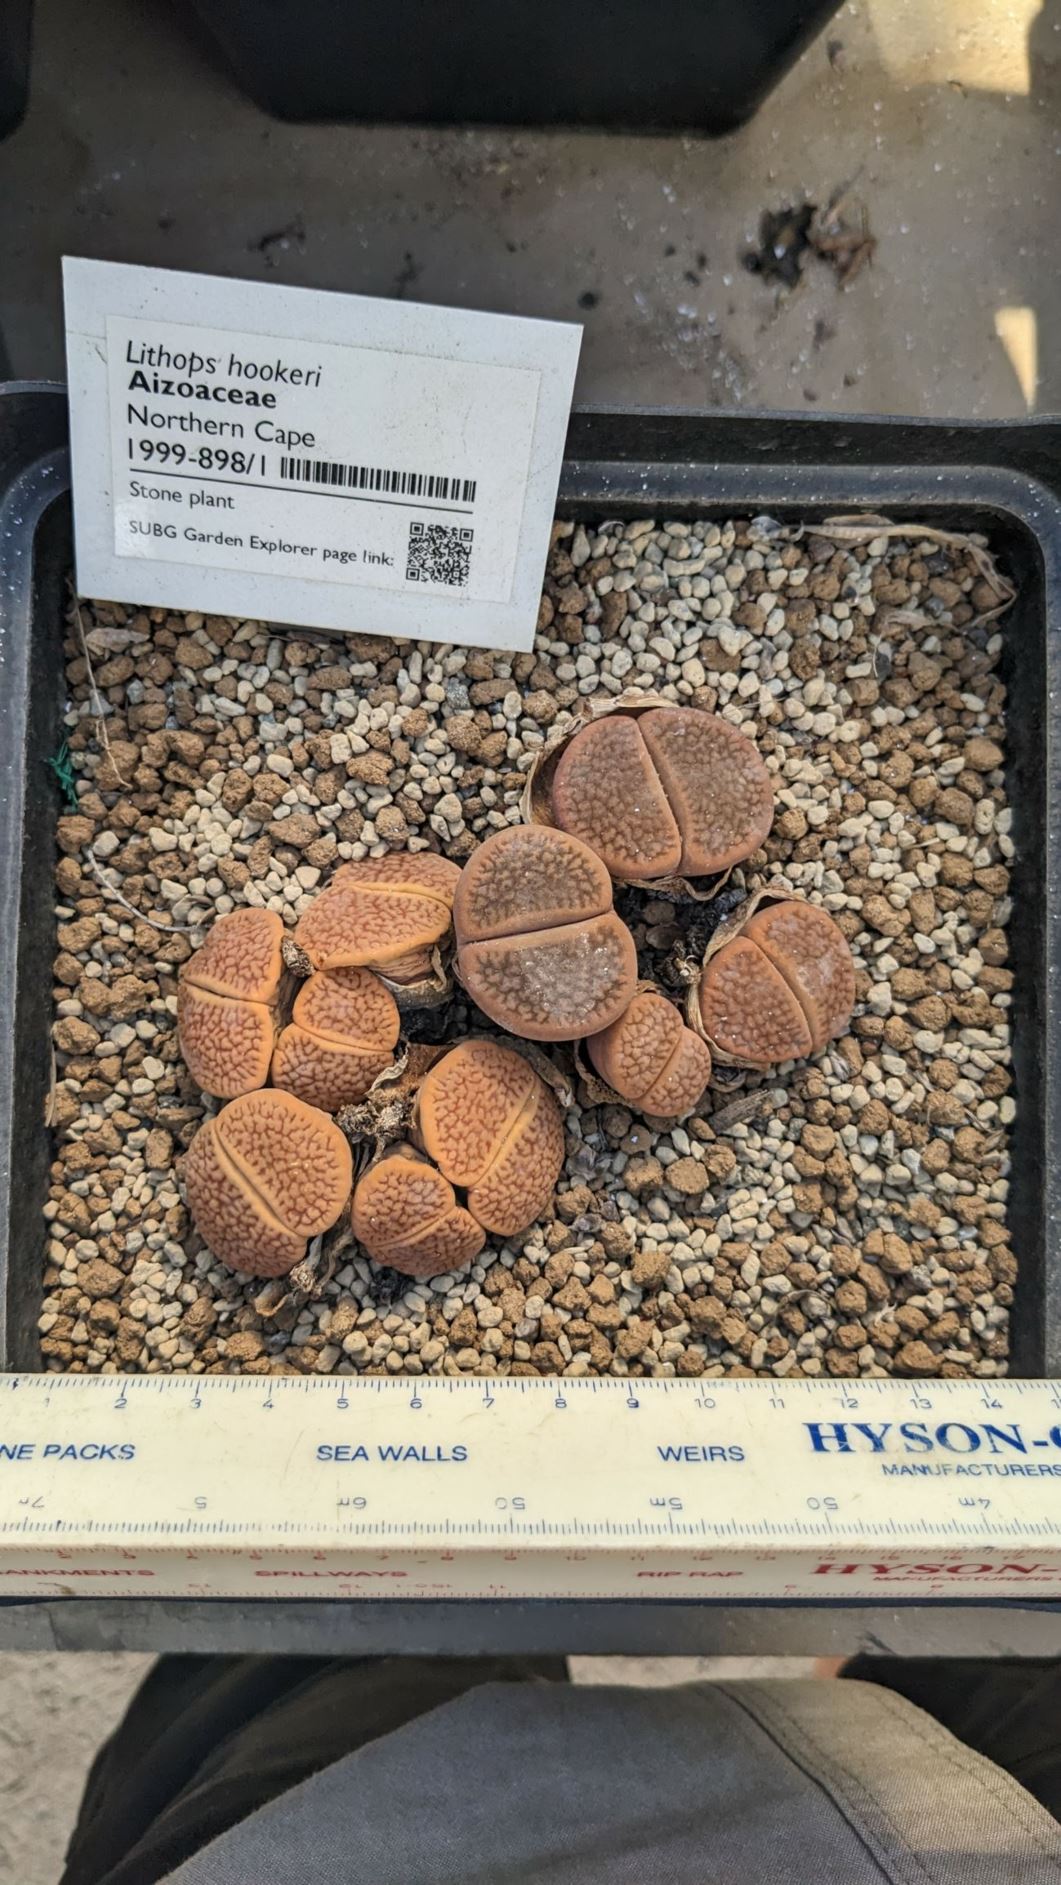 Lithops hookeri - Beeskloutjies, Stone plant